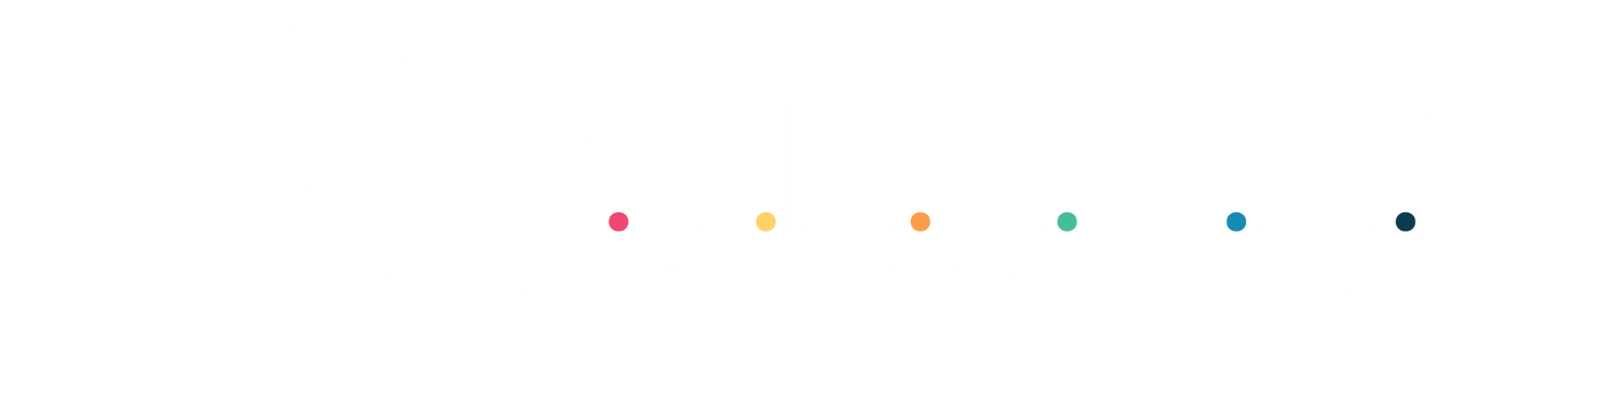 STREAM GLOBAL INNOVATIONS logo logo